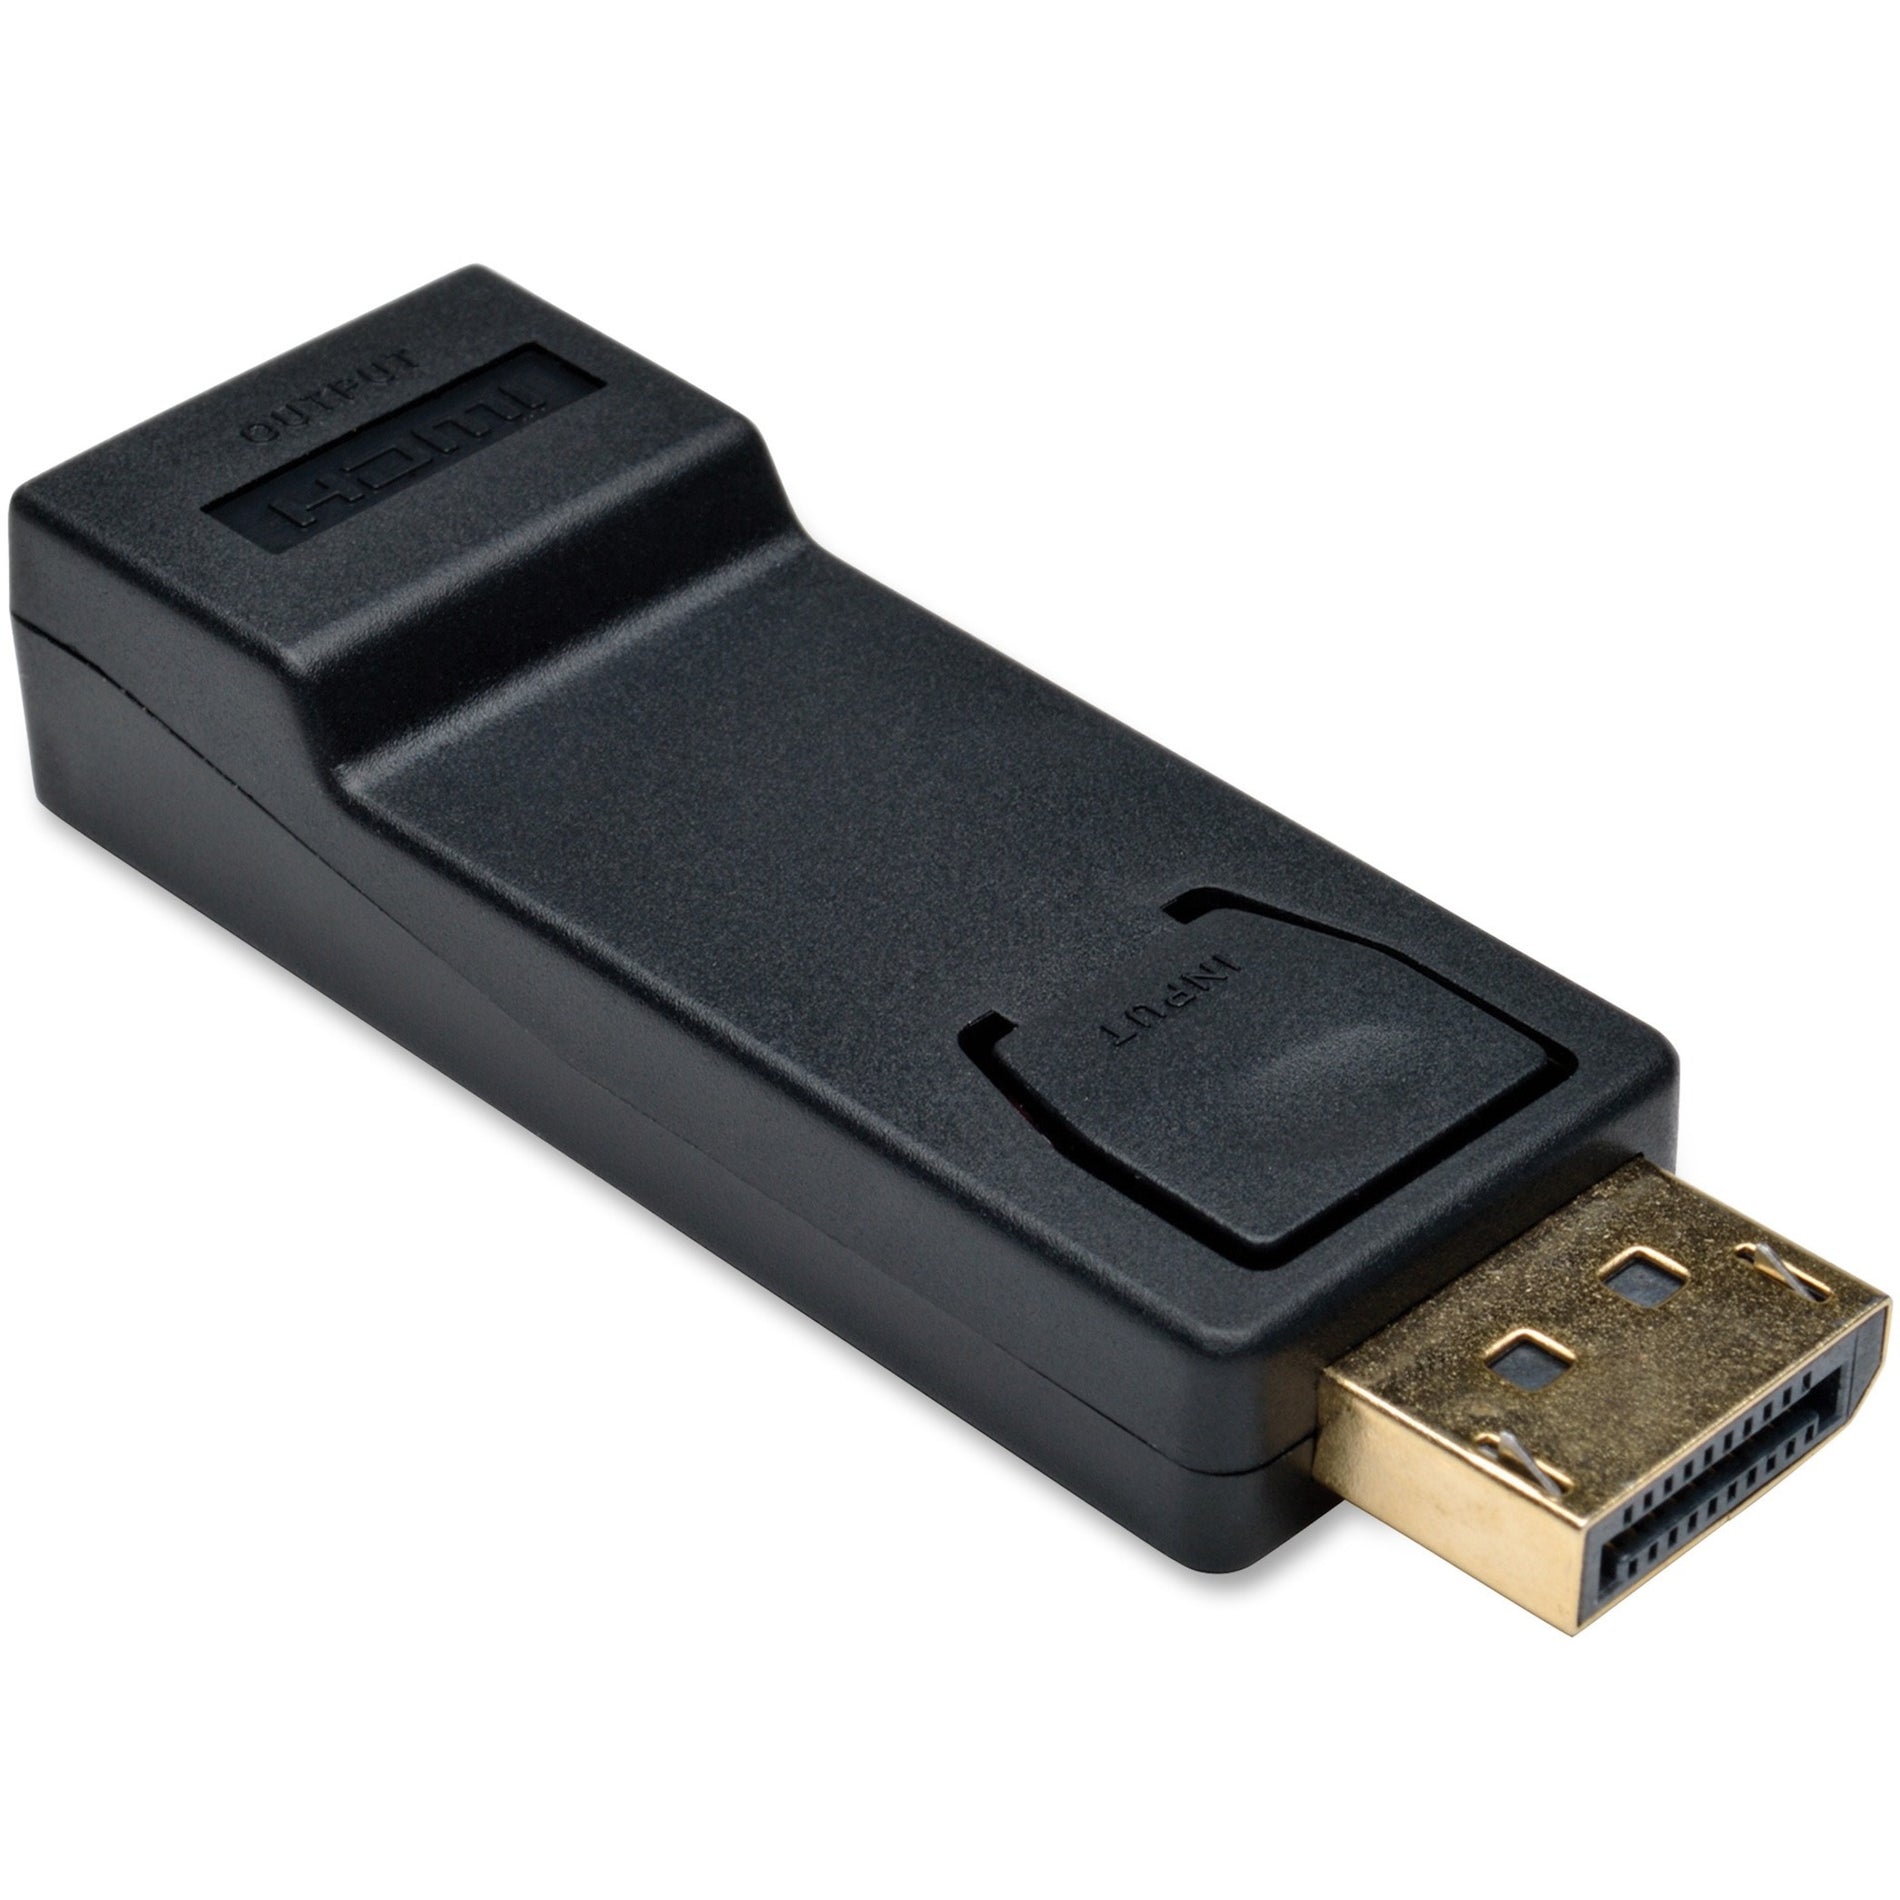 Tripp Lite P136-000-1 DisplayPort to HDMI Converter Video Adapter, Black